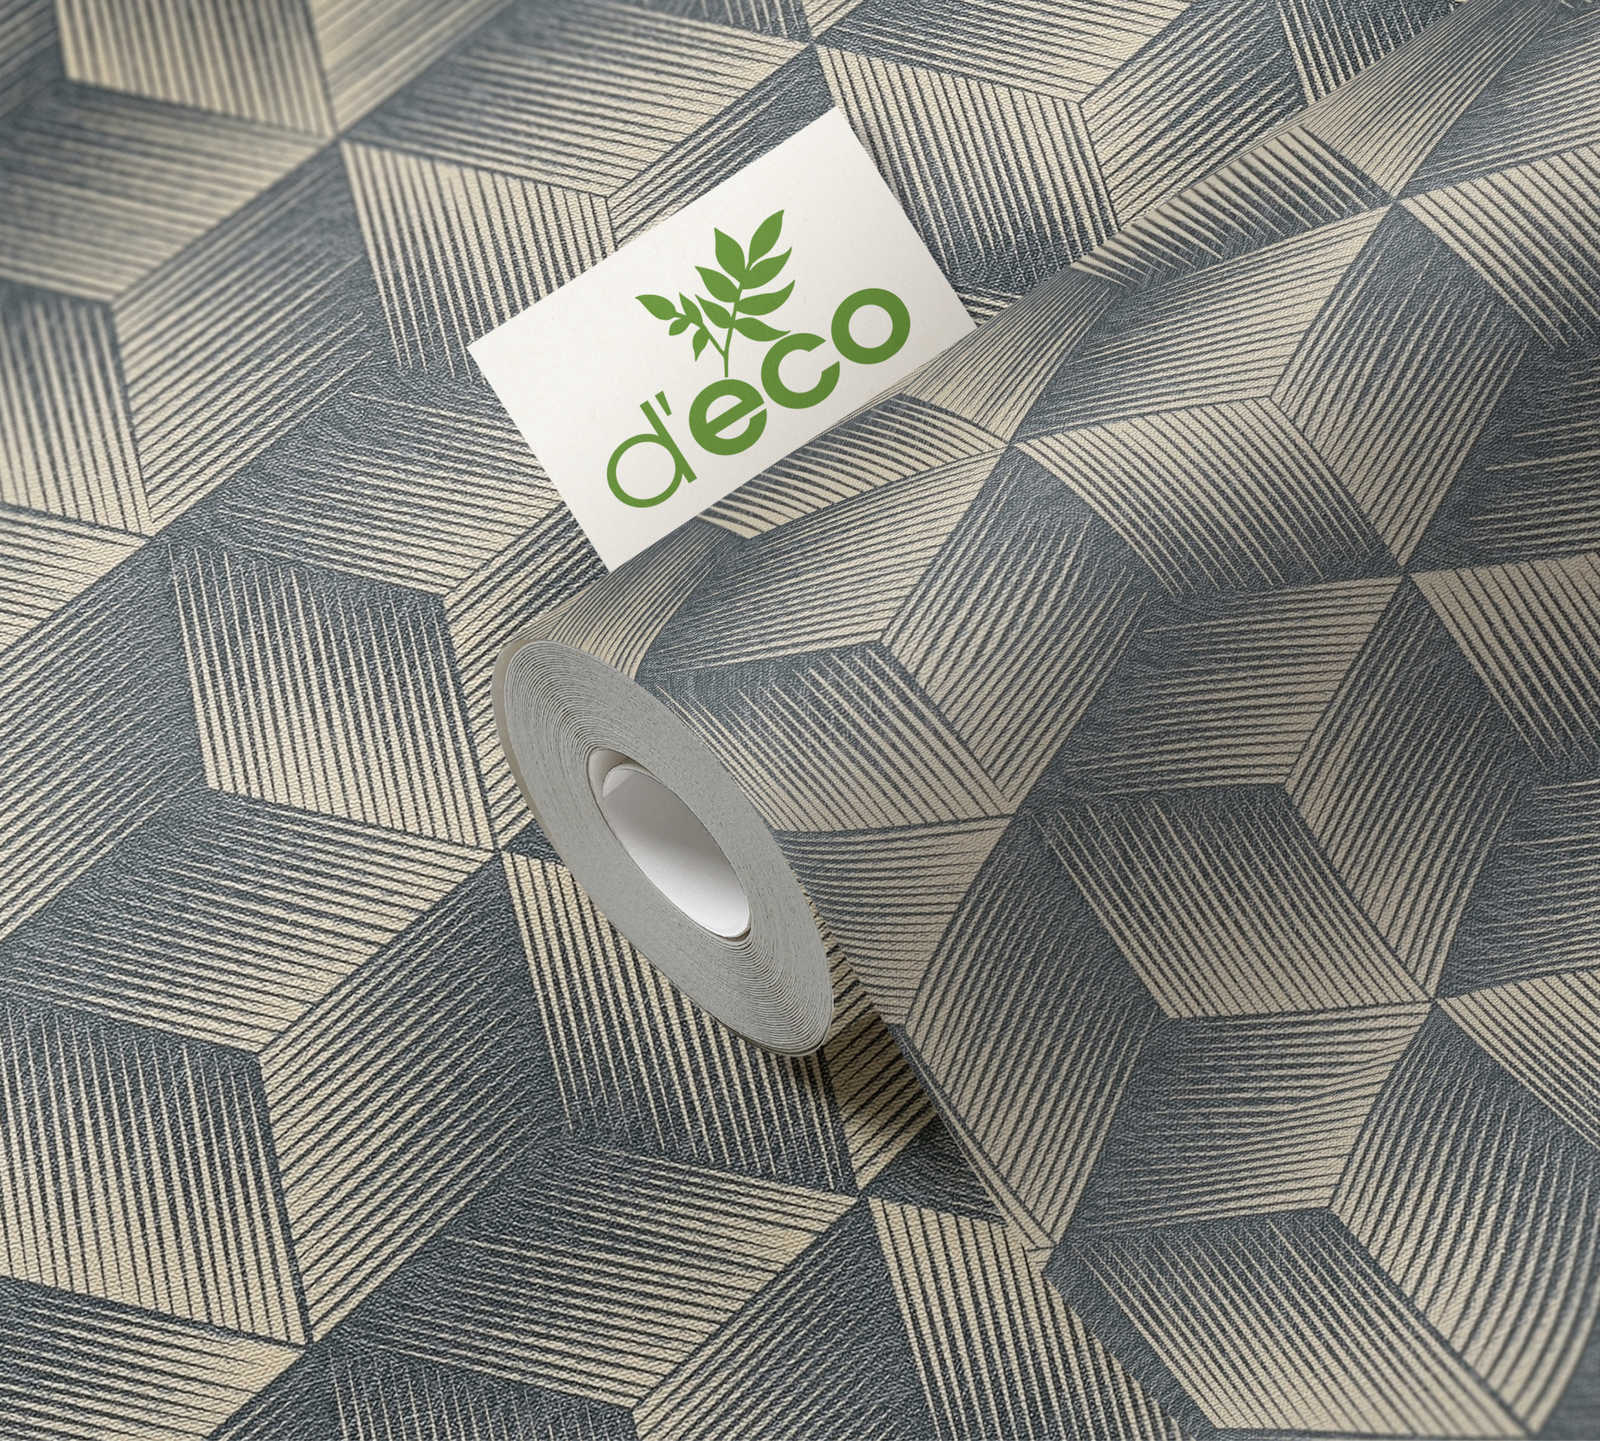             Non-woven wallpaper with cube pattern 3D-optics PVC-free - blue, beige
        